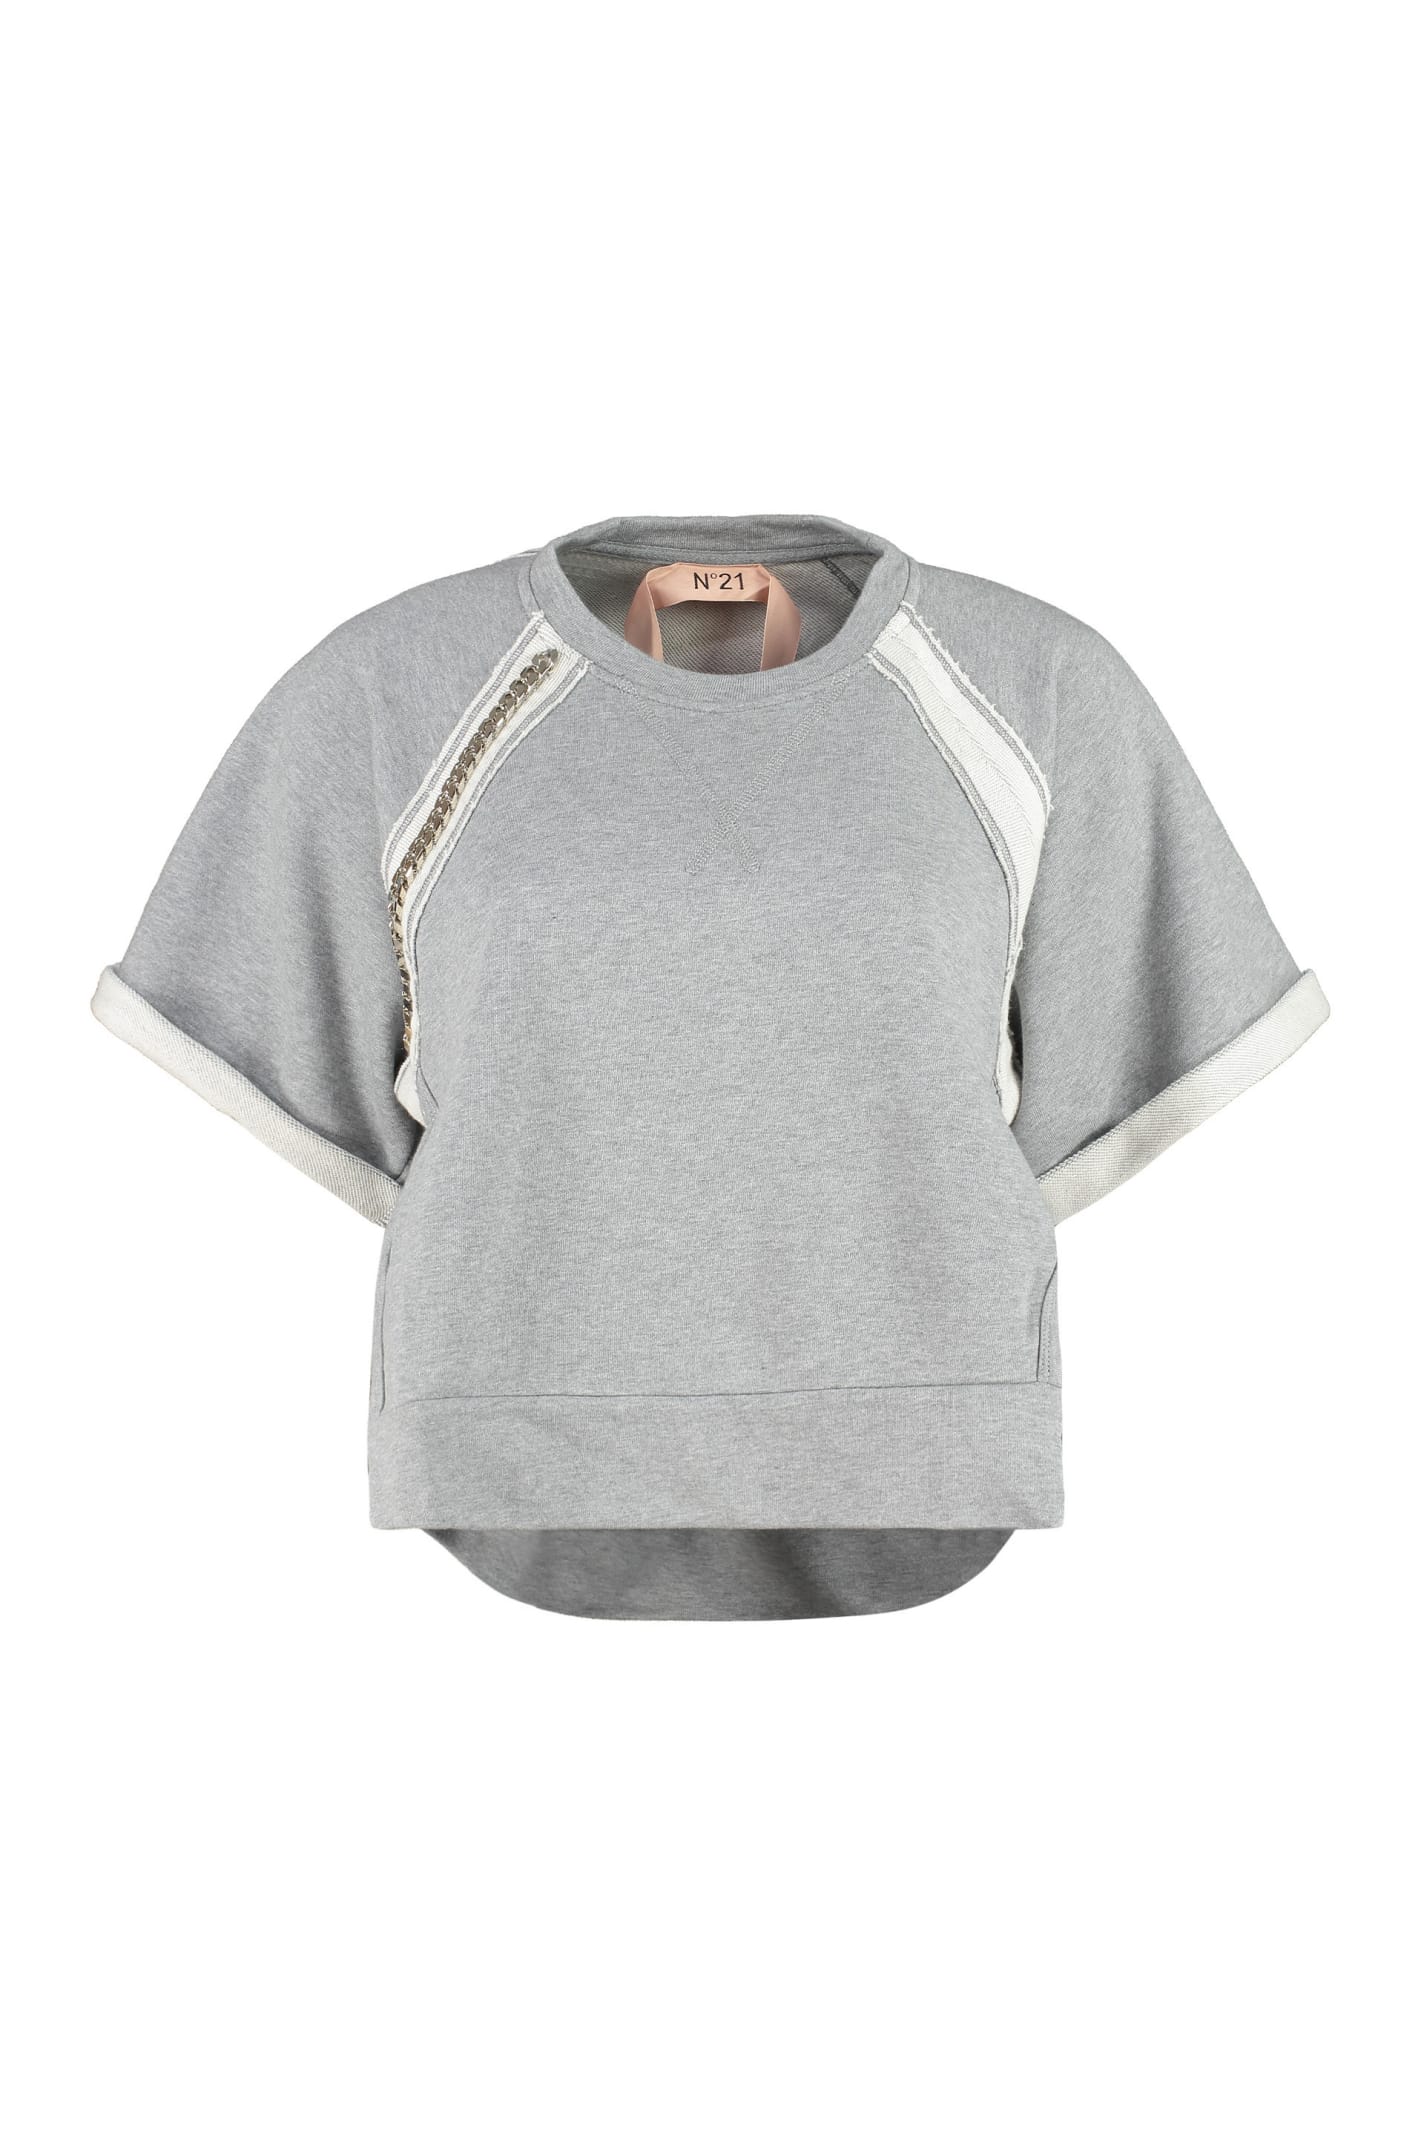 N.21 Short Sleeve Sweatshirt